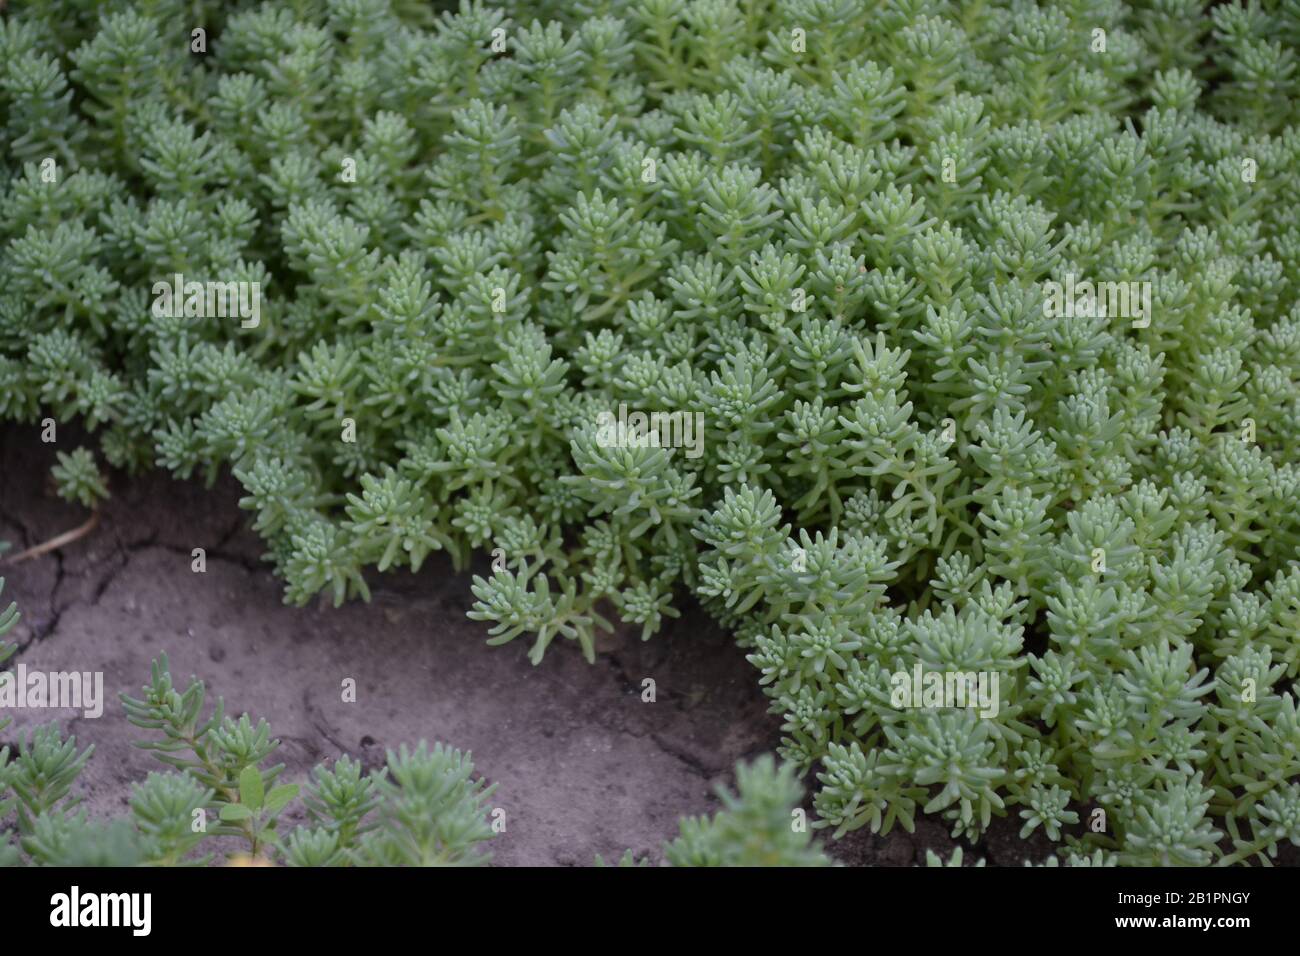 Stonecrop. Hare cabbage. Sedum. Green moss. Decorative grassy carpet. Green flower bed decoration. Horizontal photo Stock Photo